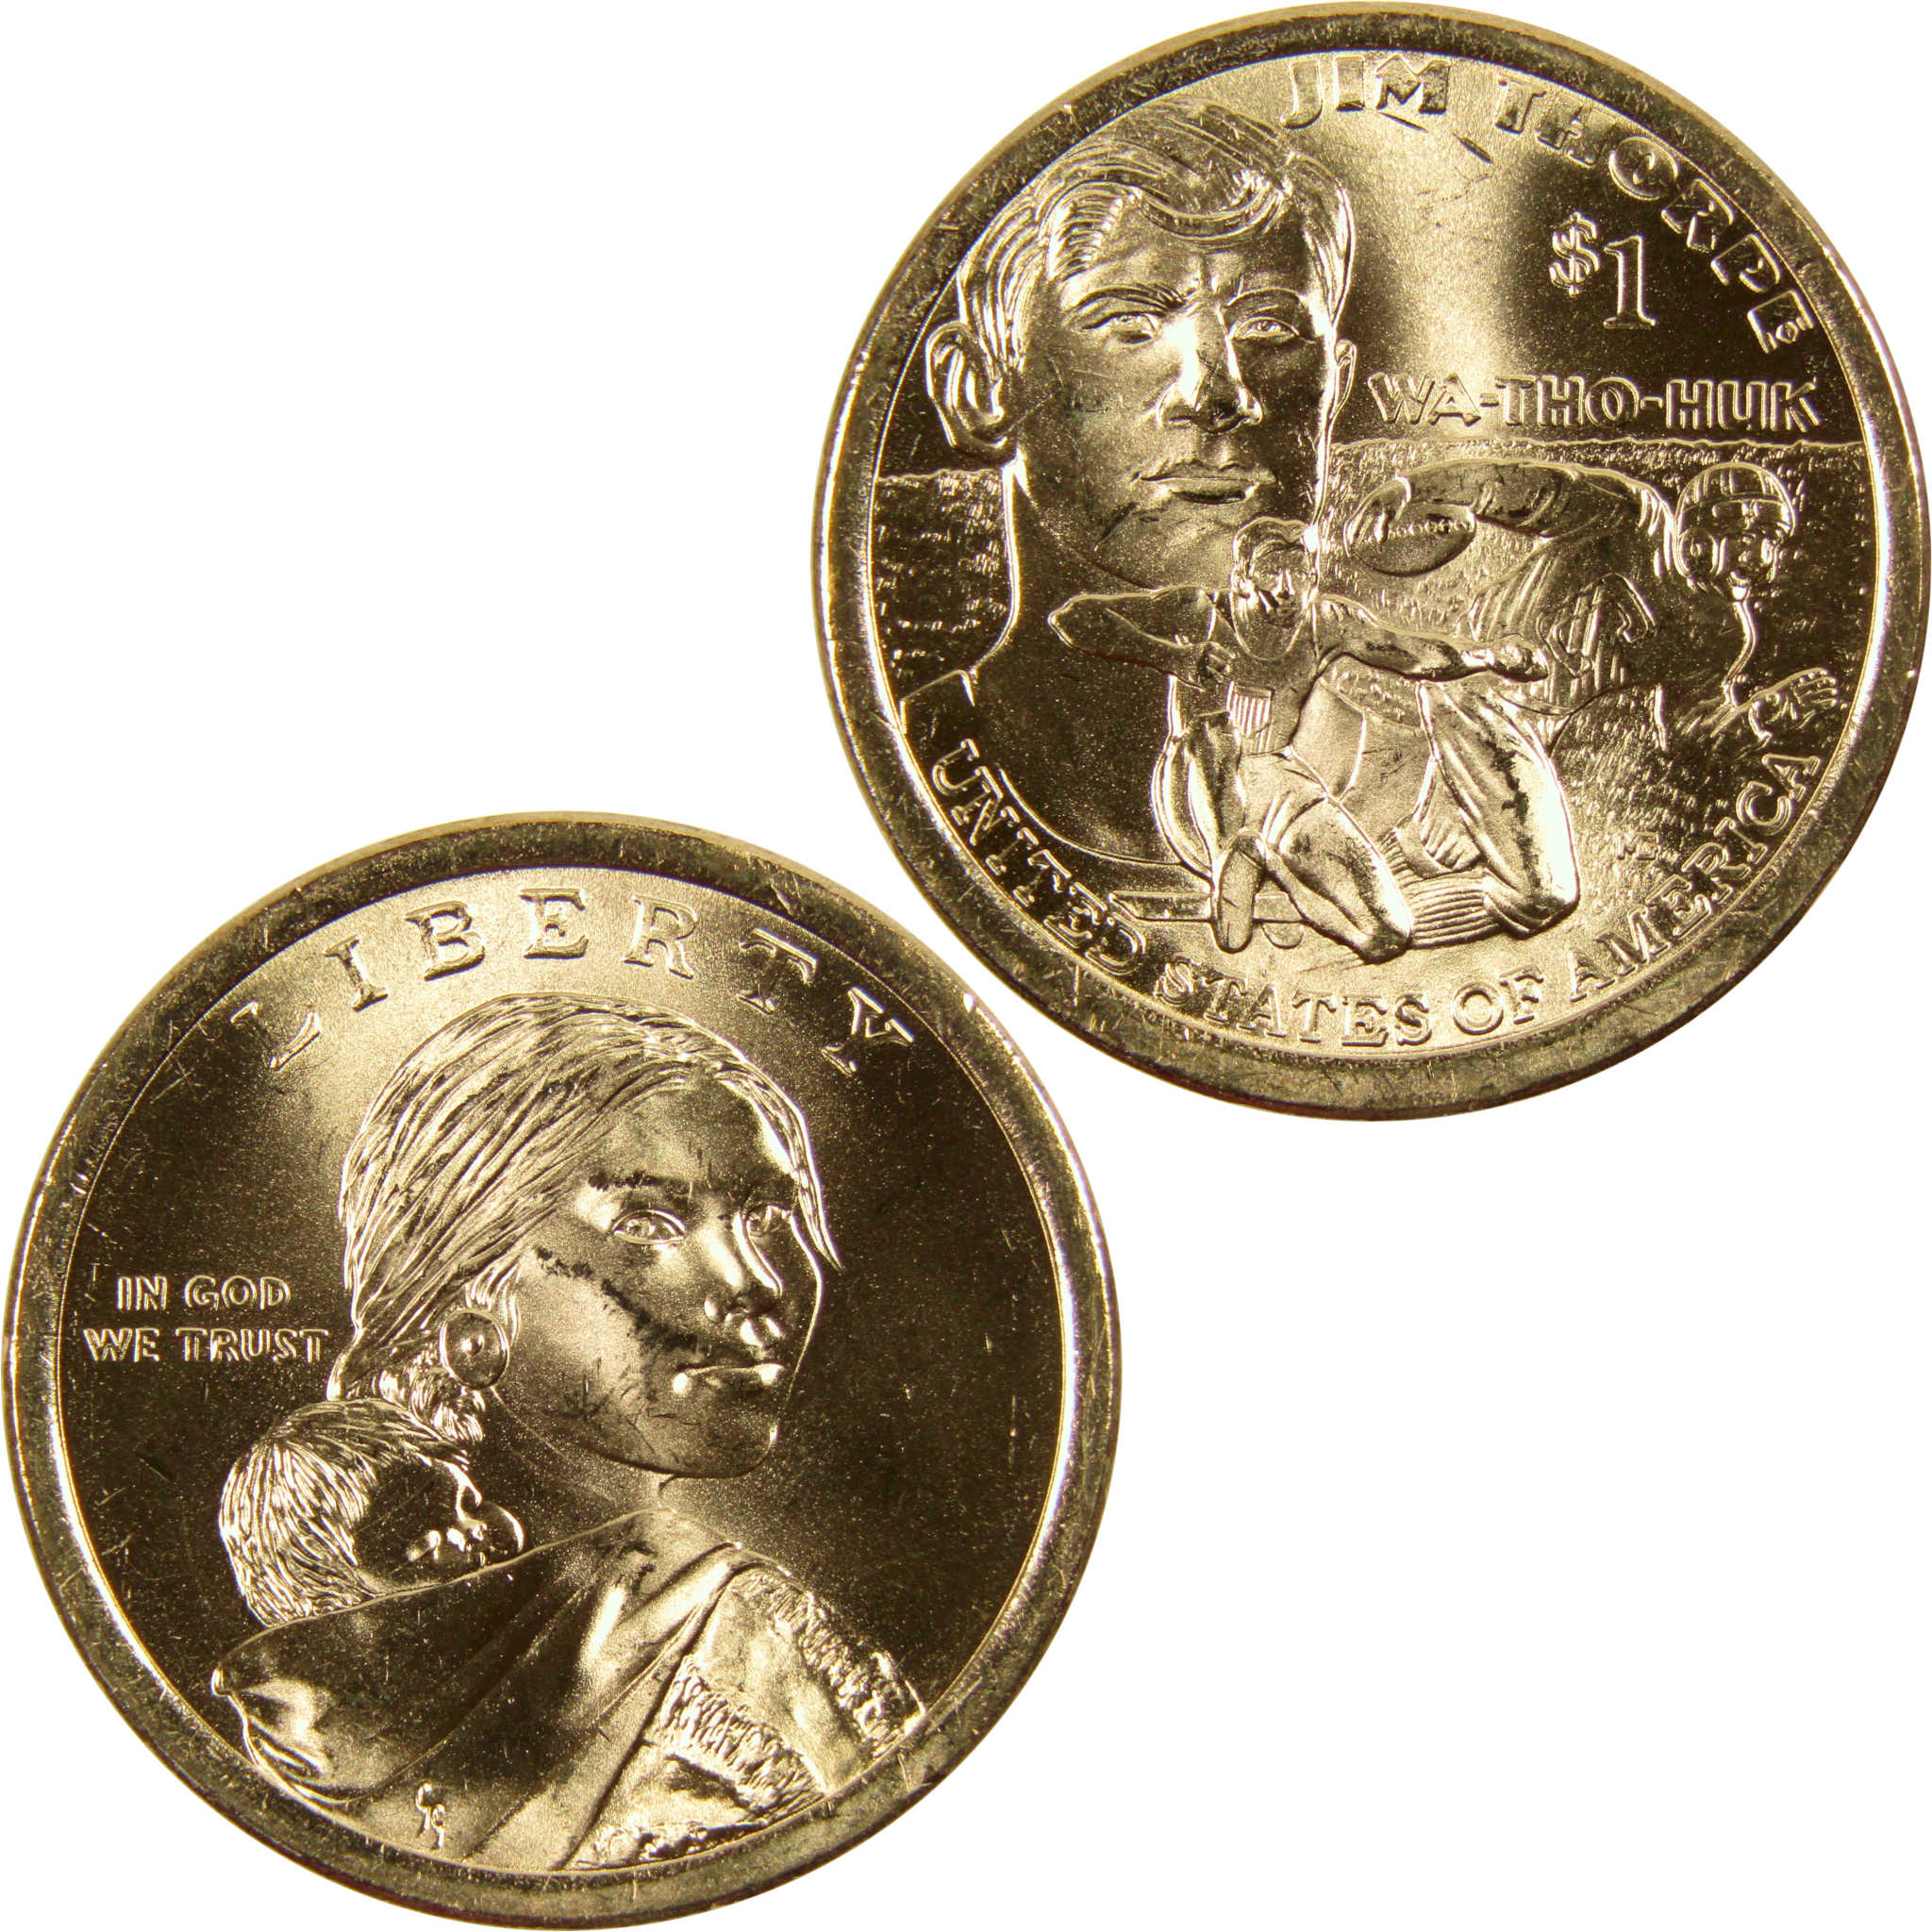 2018 P Jim Thorpe Native American Dollar BU Uncirculated $1 Coin